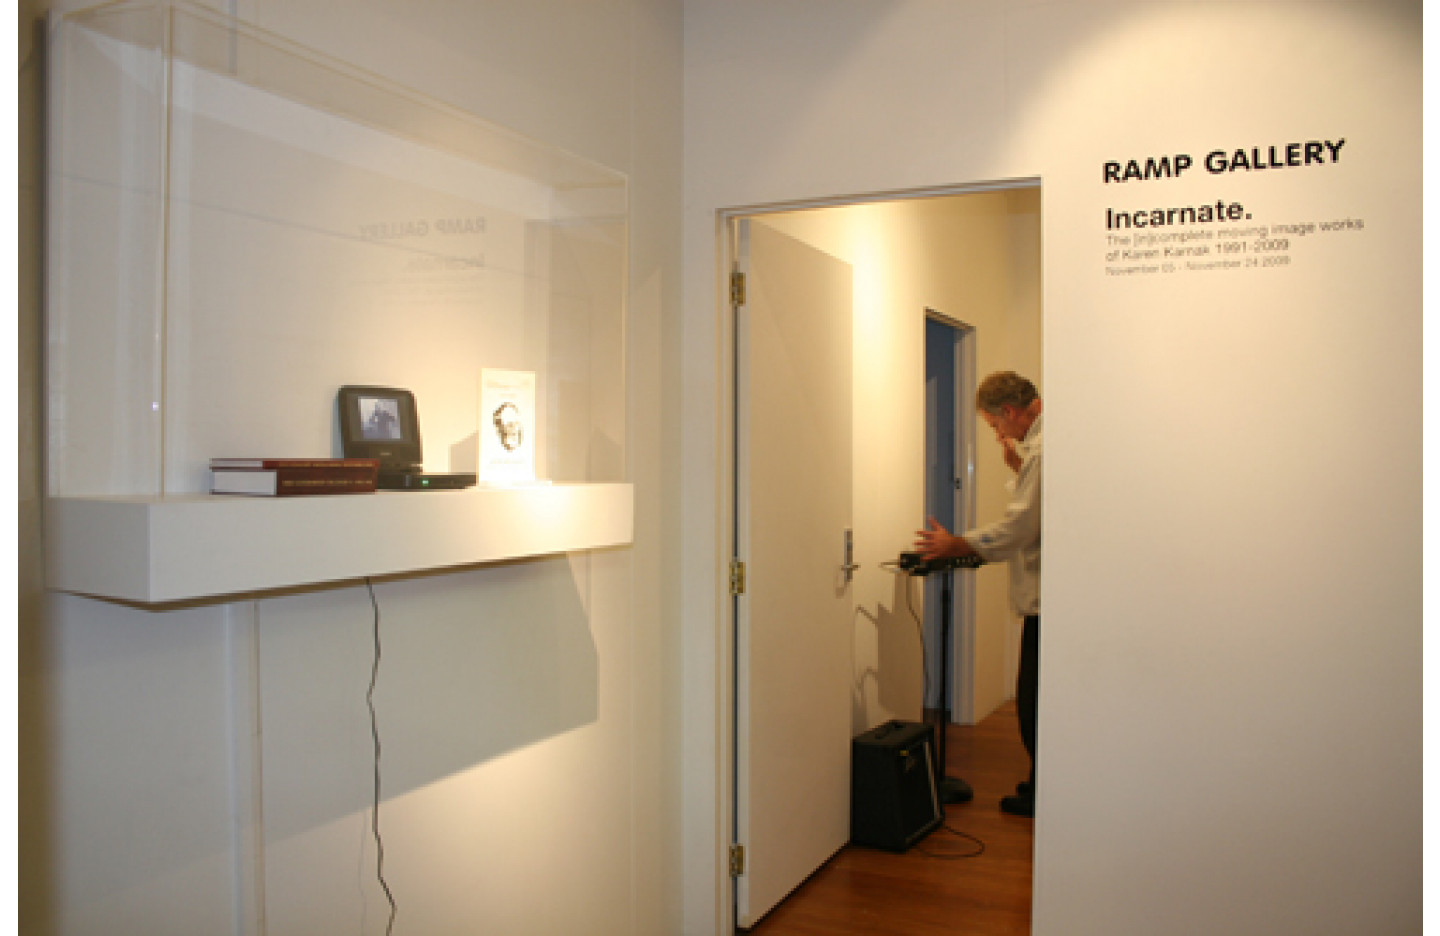 Incarnate, Ramp Gallery (2009)